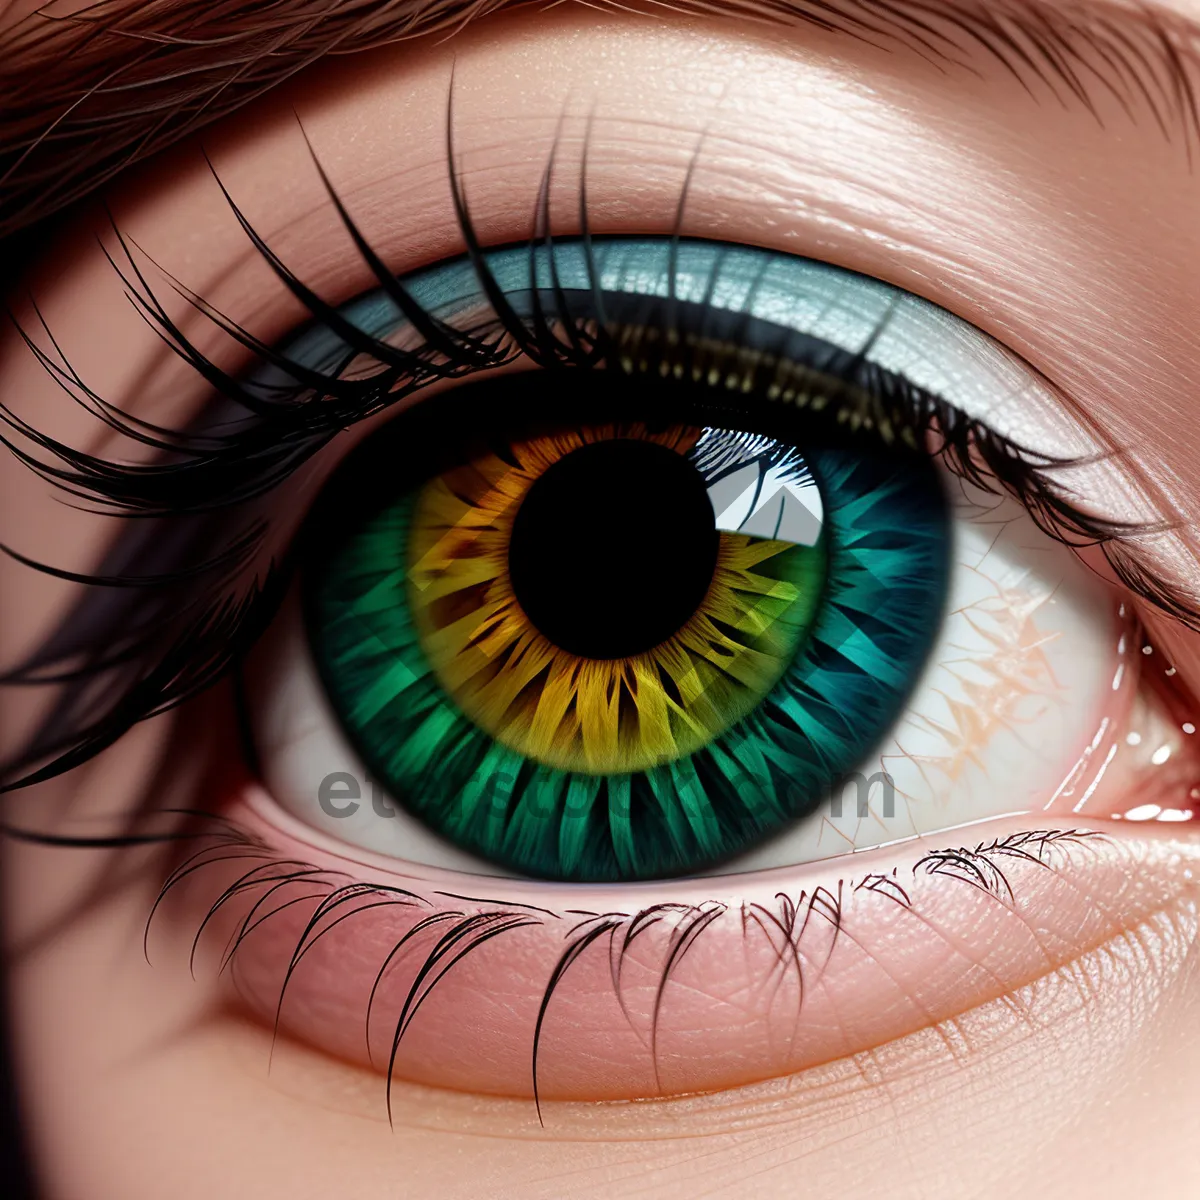 Picture of Captivating Eyeball Enhancing Vision Closeup